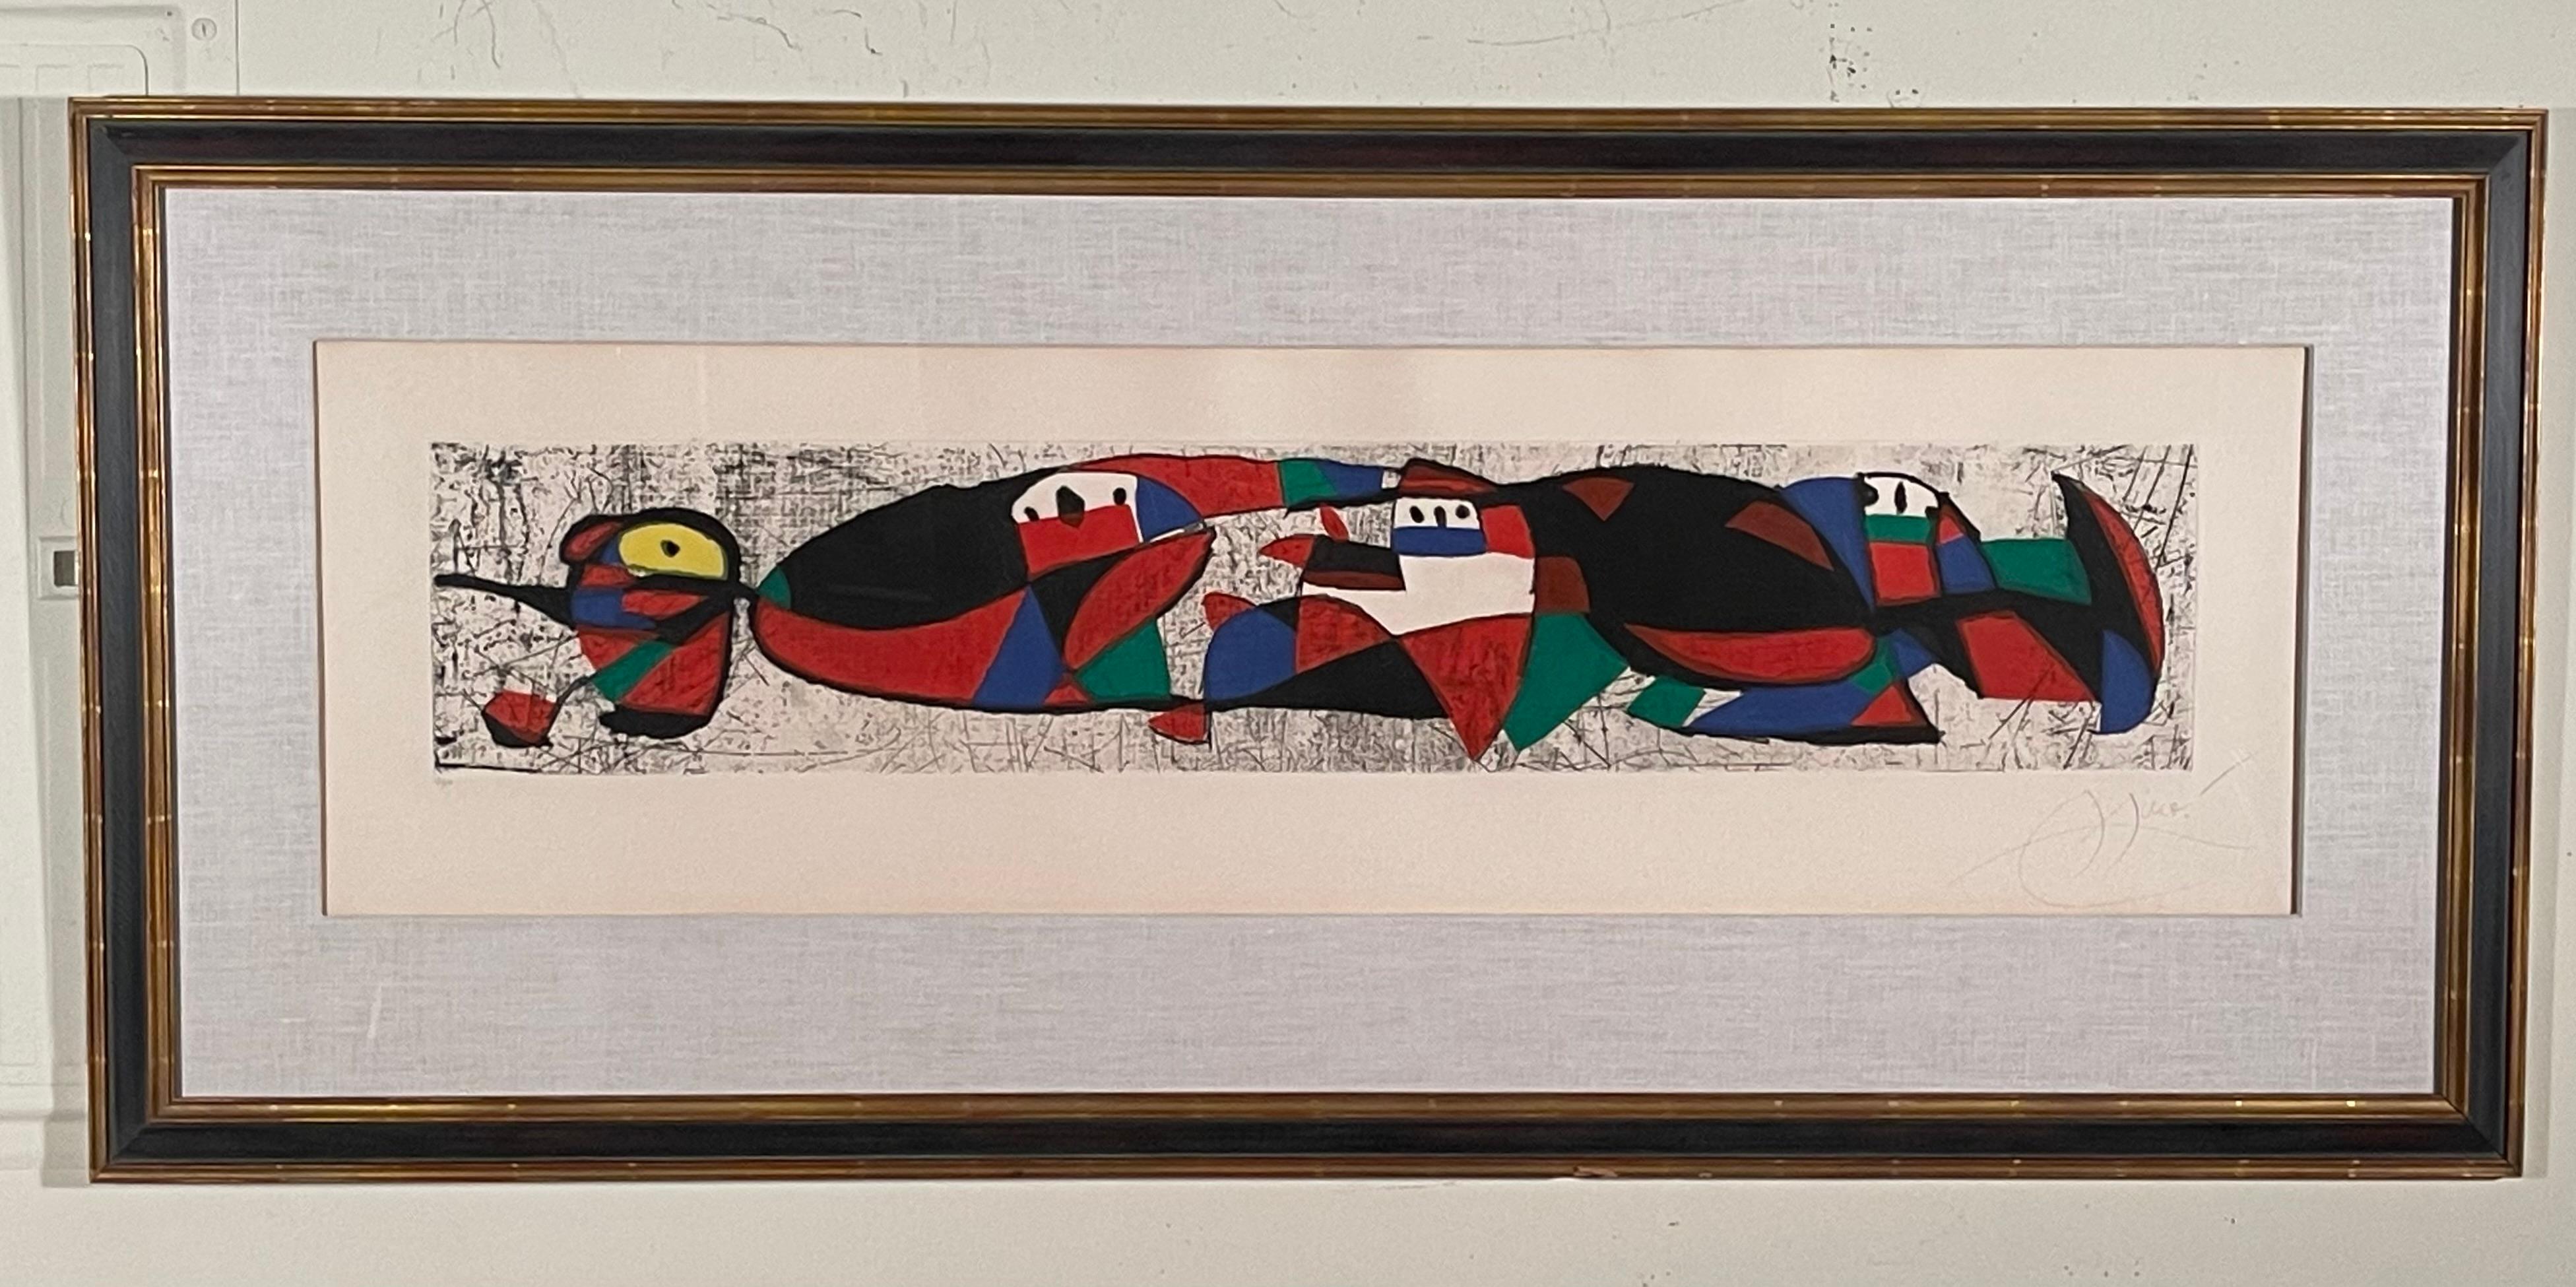 LES TROGLODYTES - Print by Joan Miró